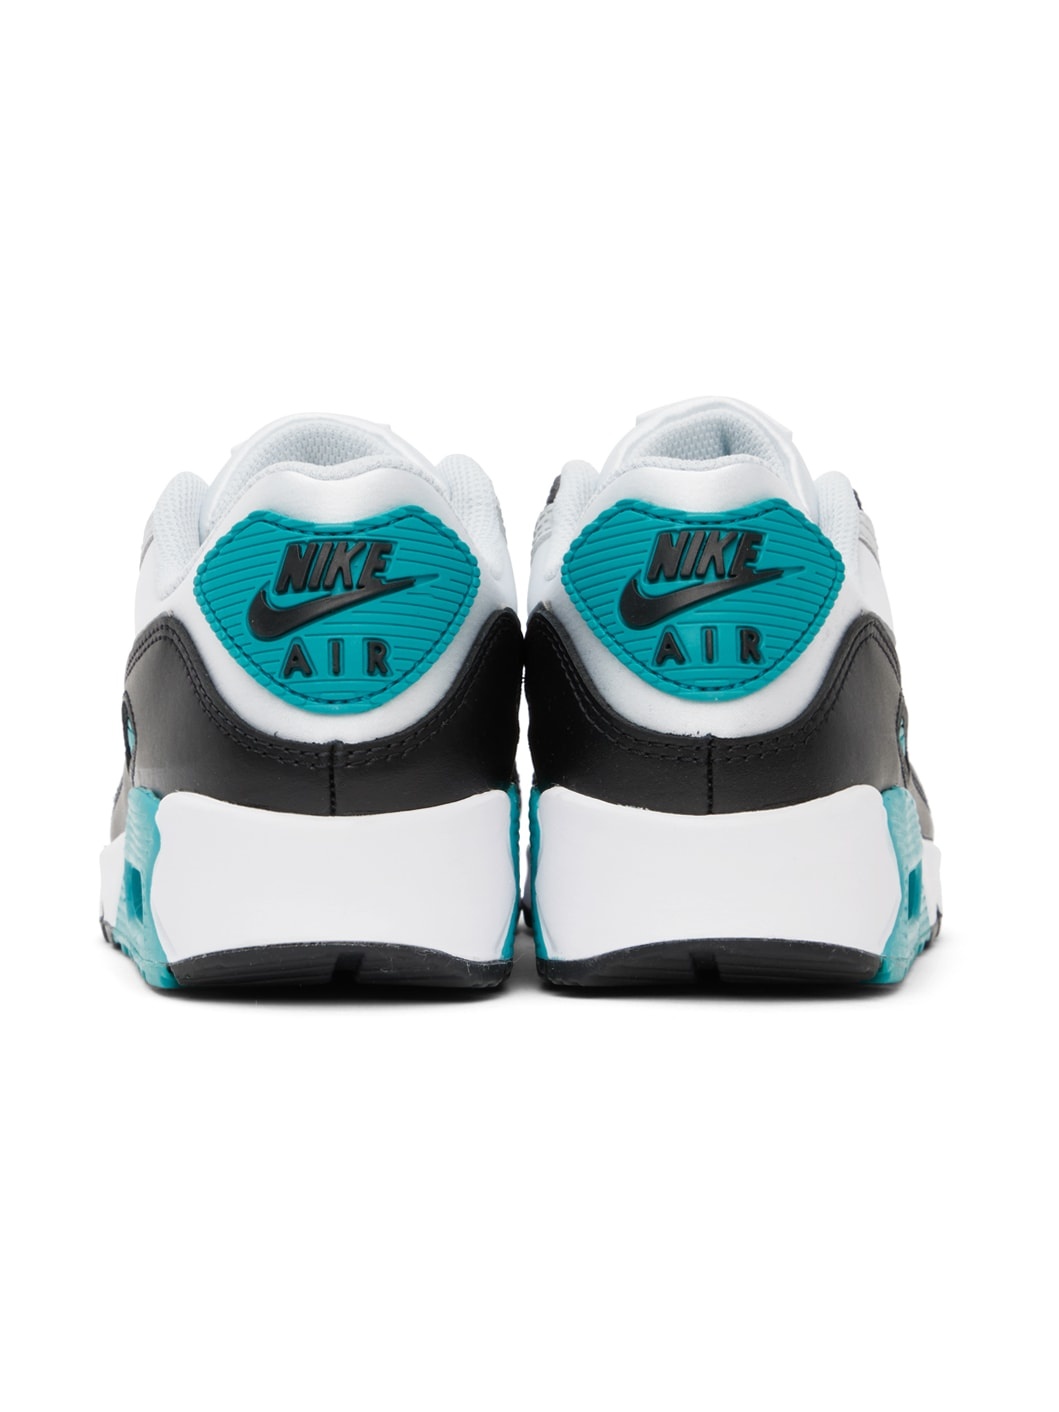 Gray & Blue Air Max 90 Sneakers - 2